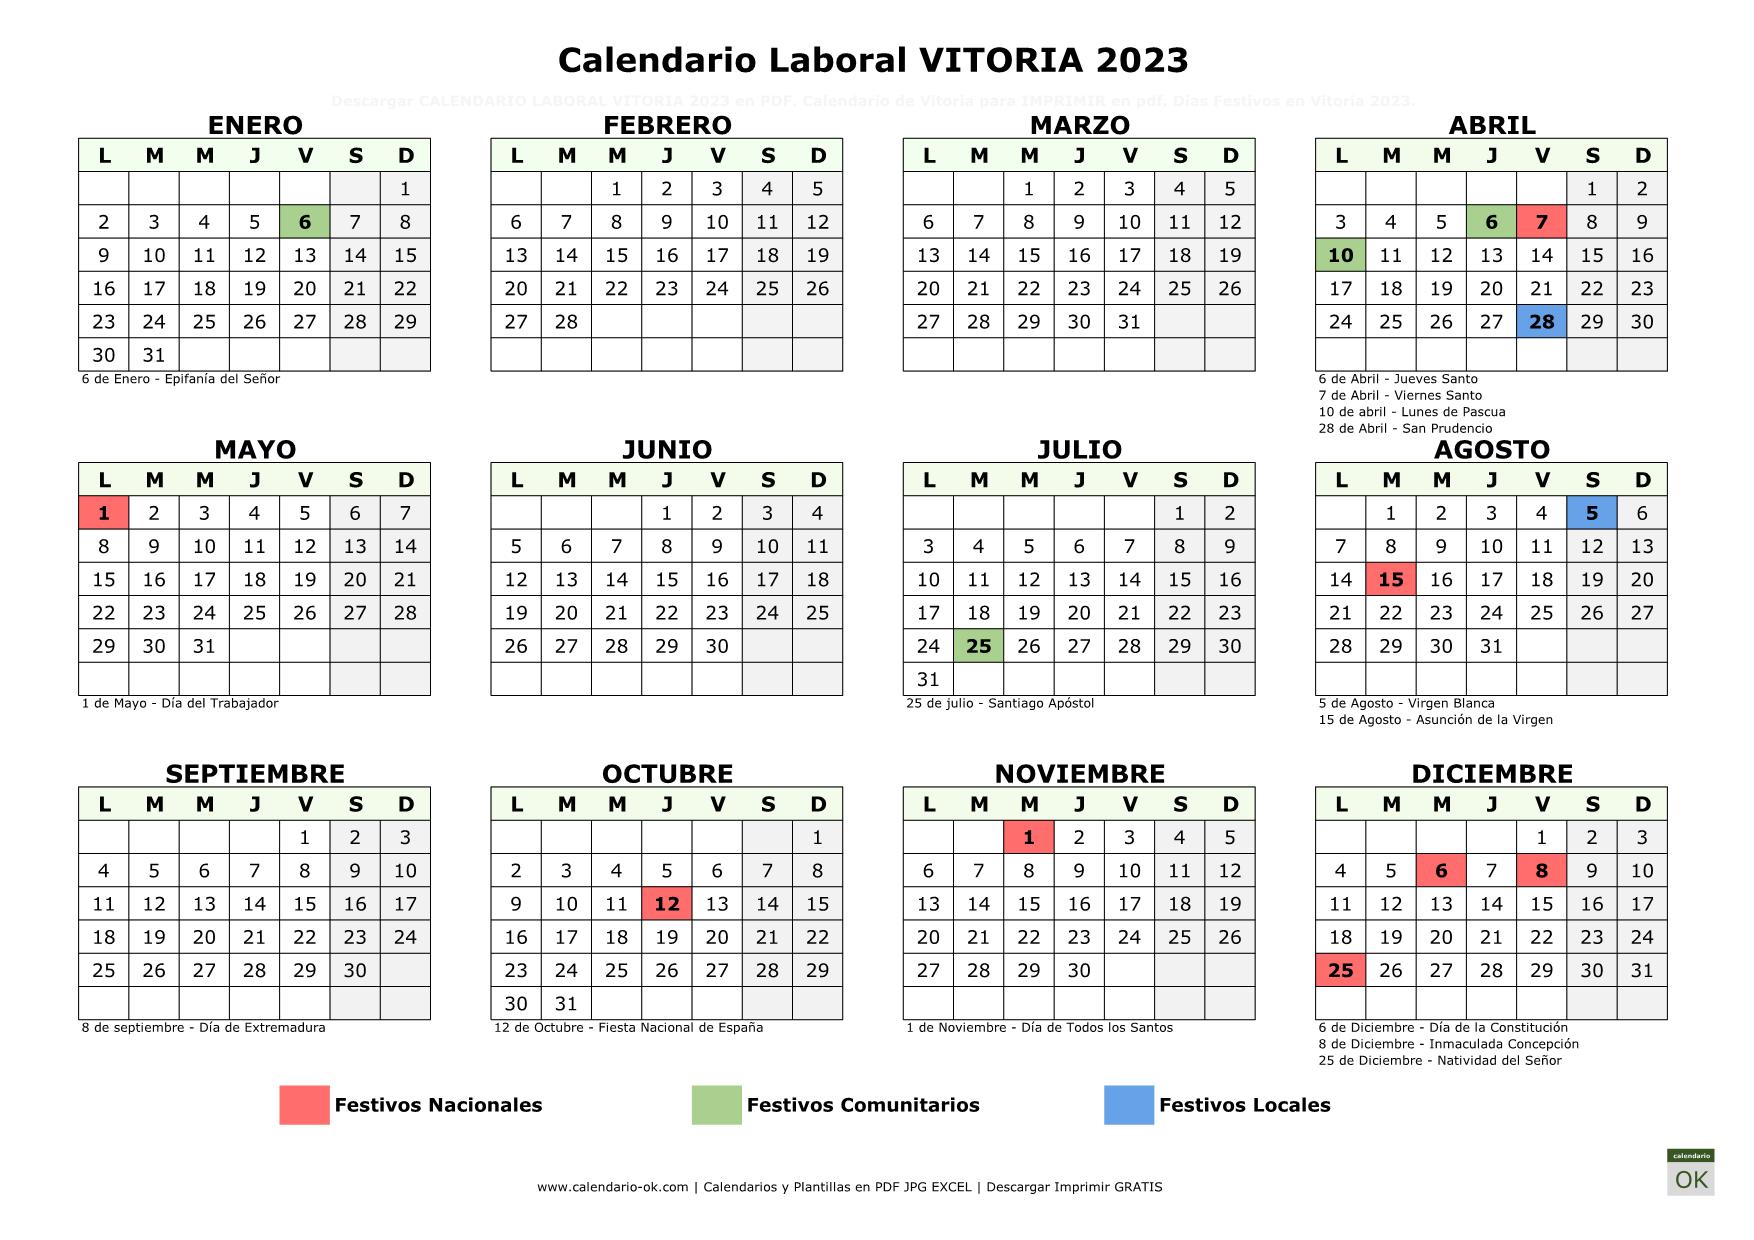 Calendario Laboral Vitoria 2023 horizontal